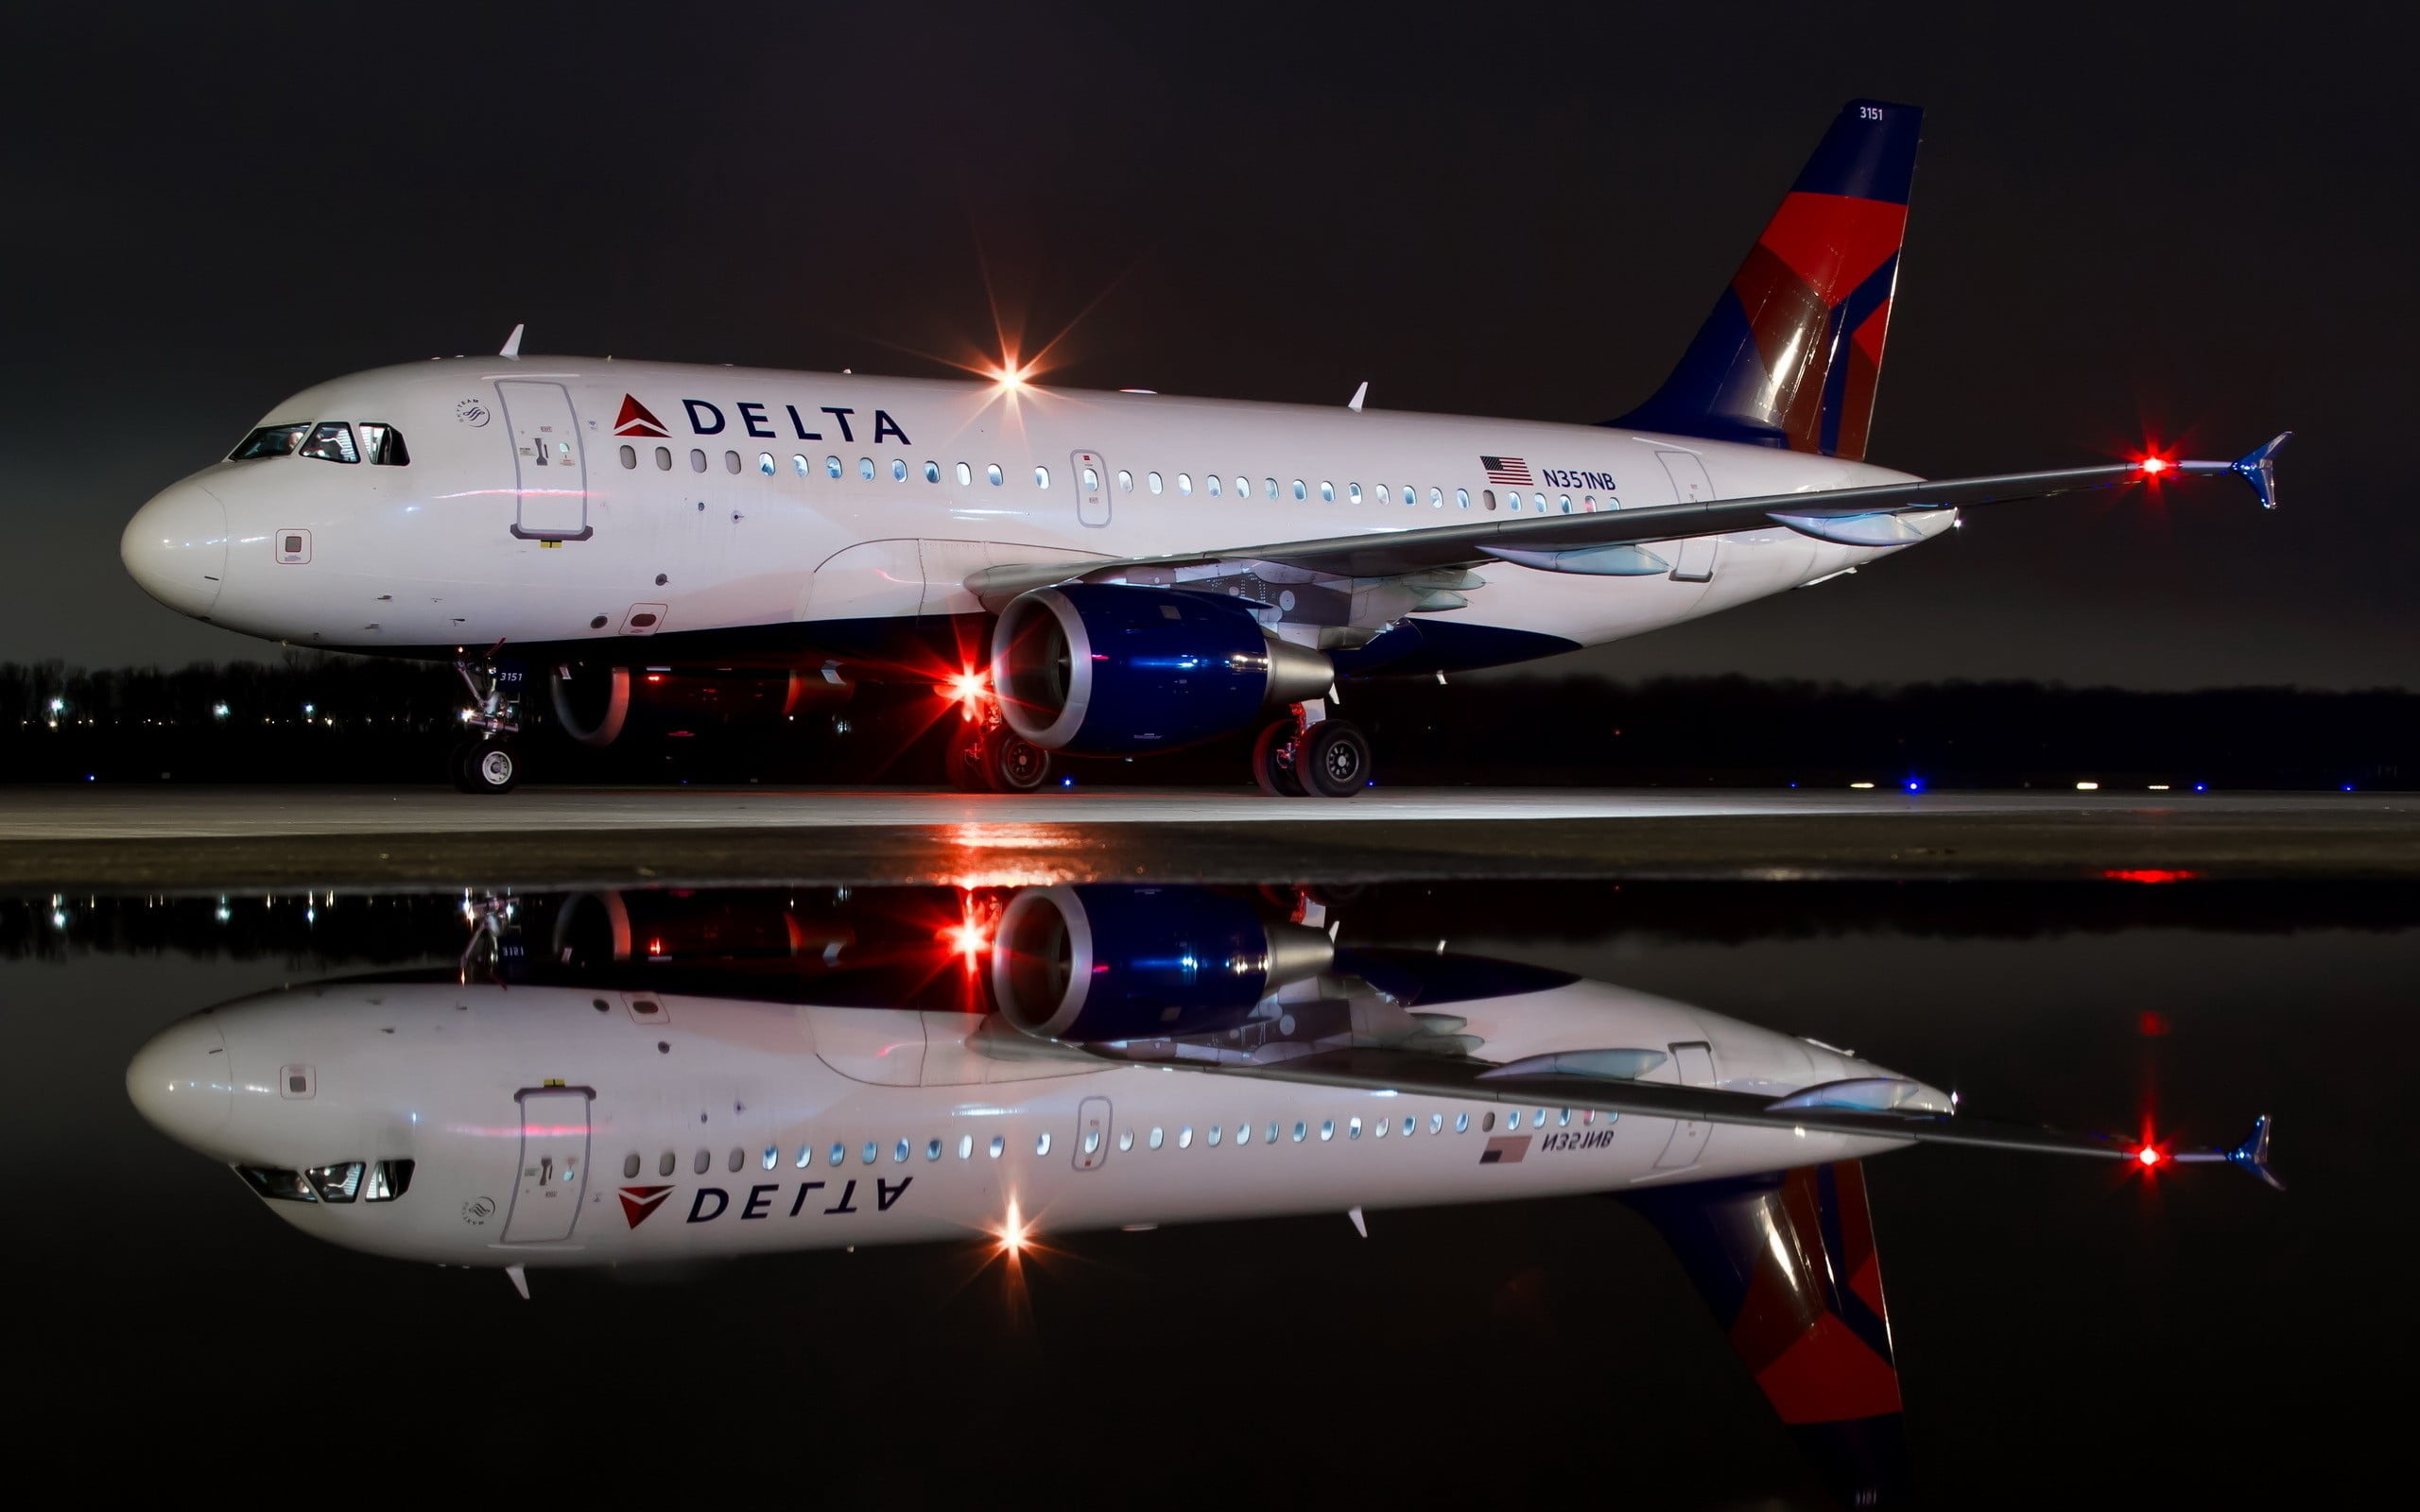 Delta Airline Pictures  Download Free Images on Unsplash